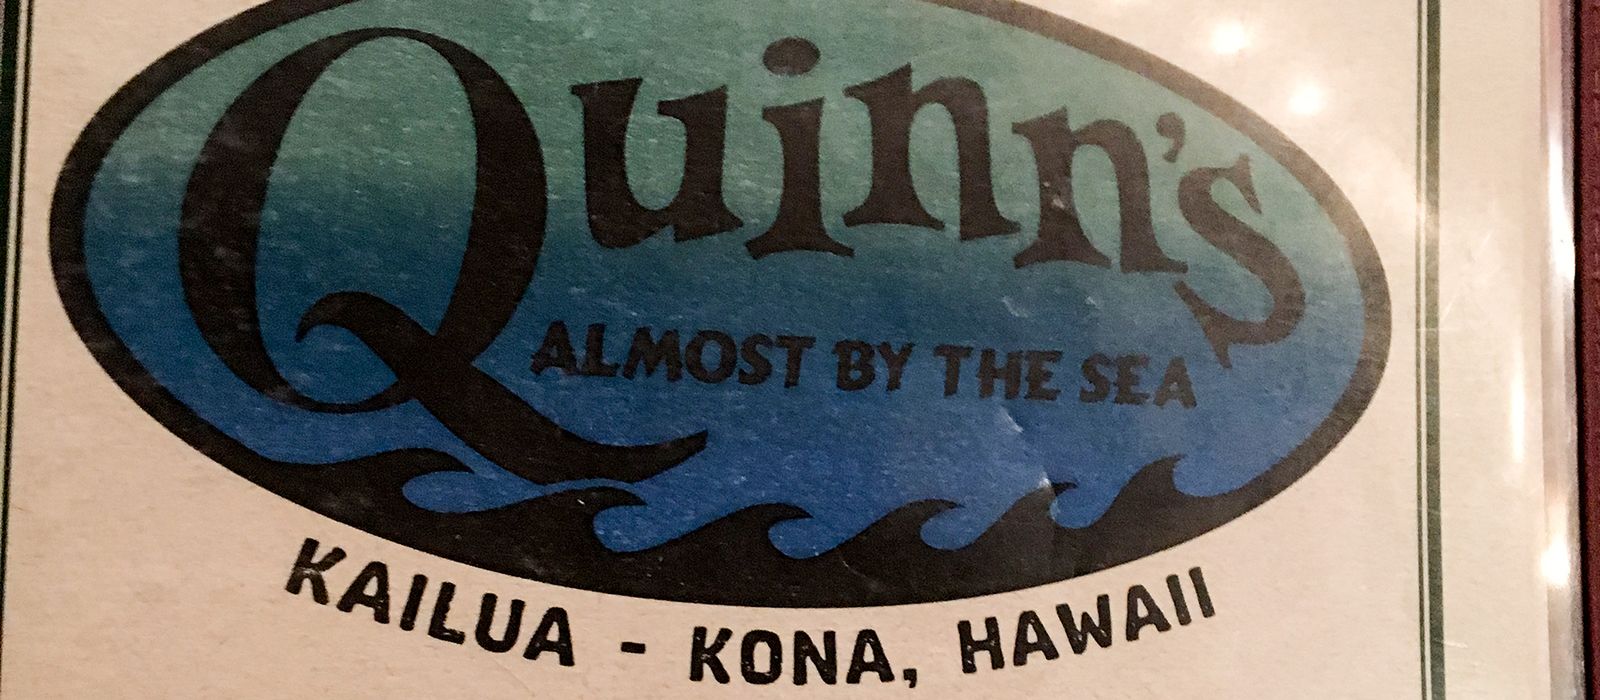 Karte des Quinn's Restaurant in Kailua-Kona, Hawaii